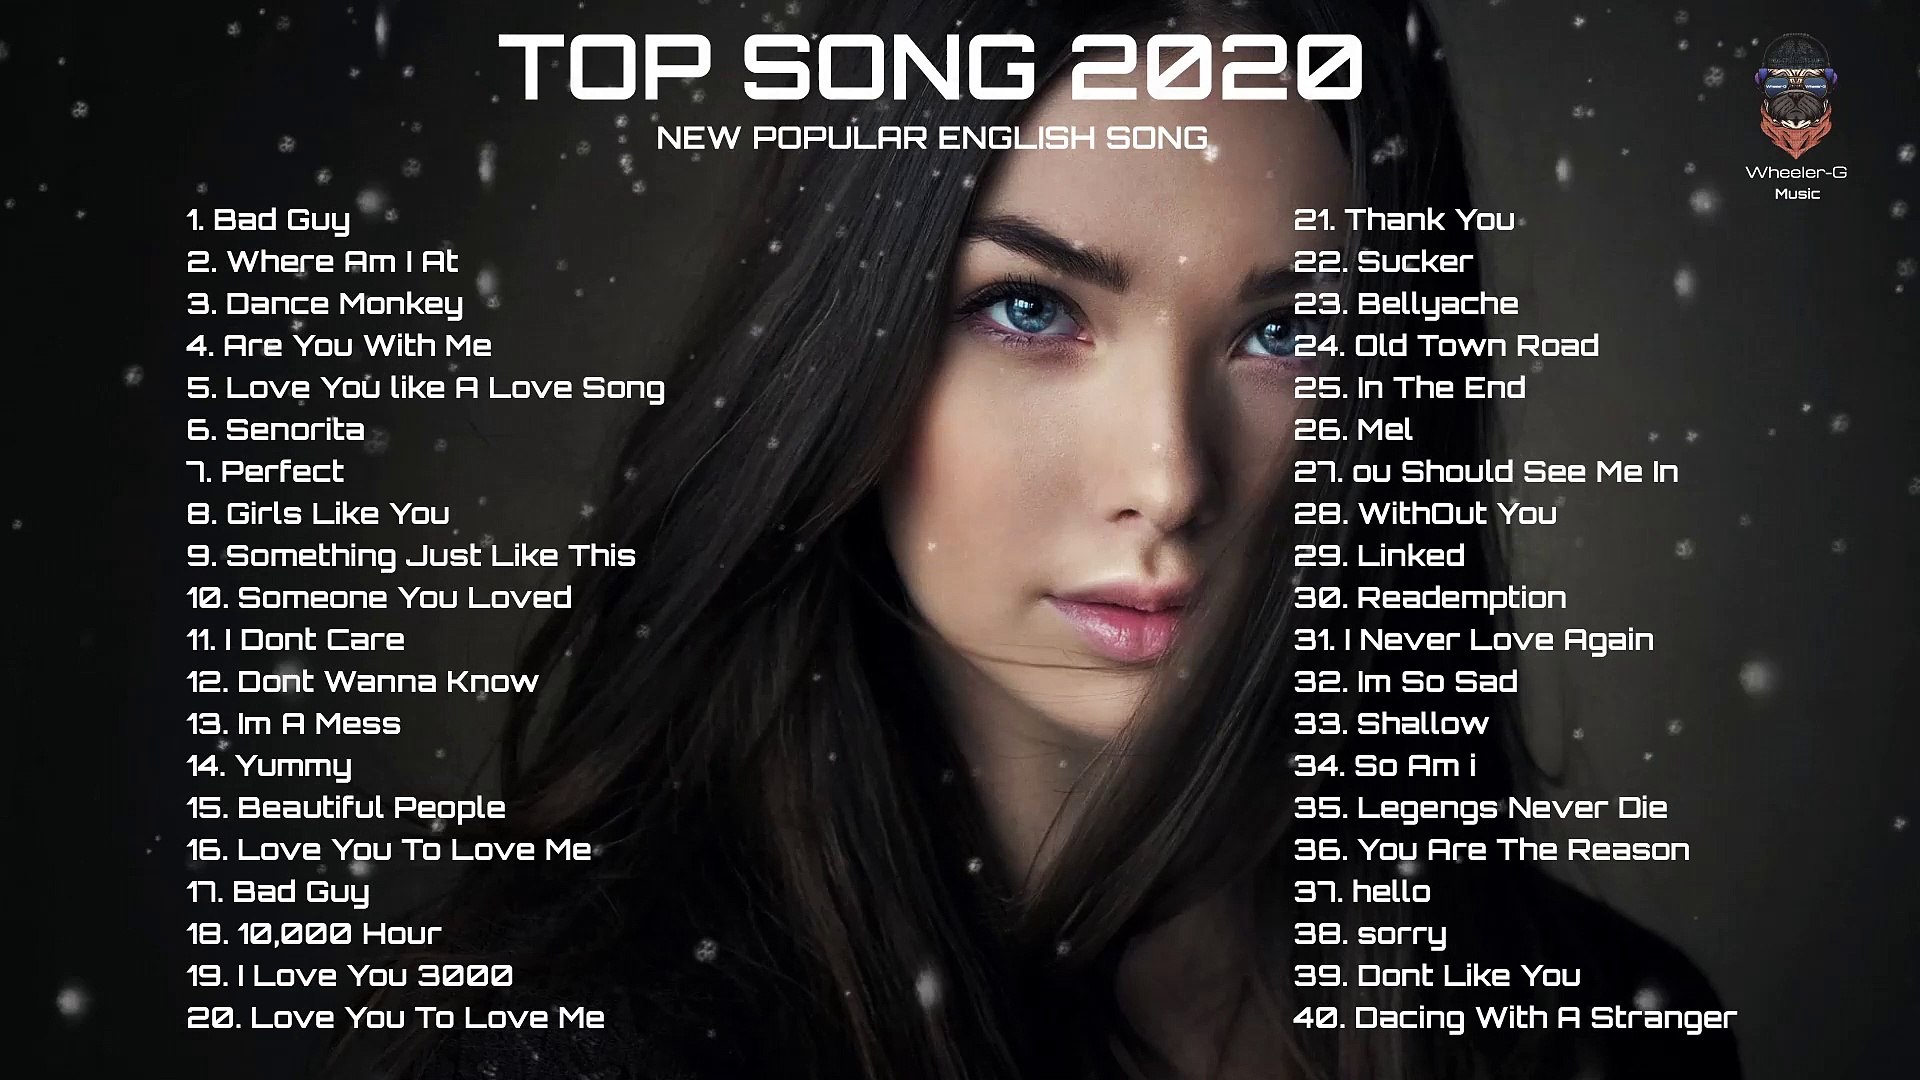 Music Top 50 Song - Music Billboard - Music Top Songs 2020   [Wheeler-G]